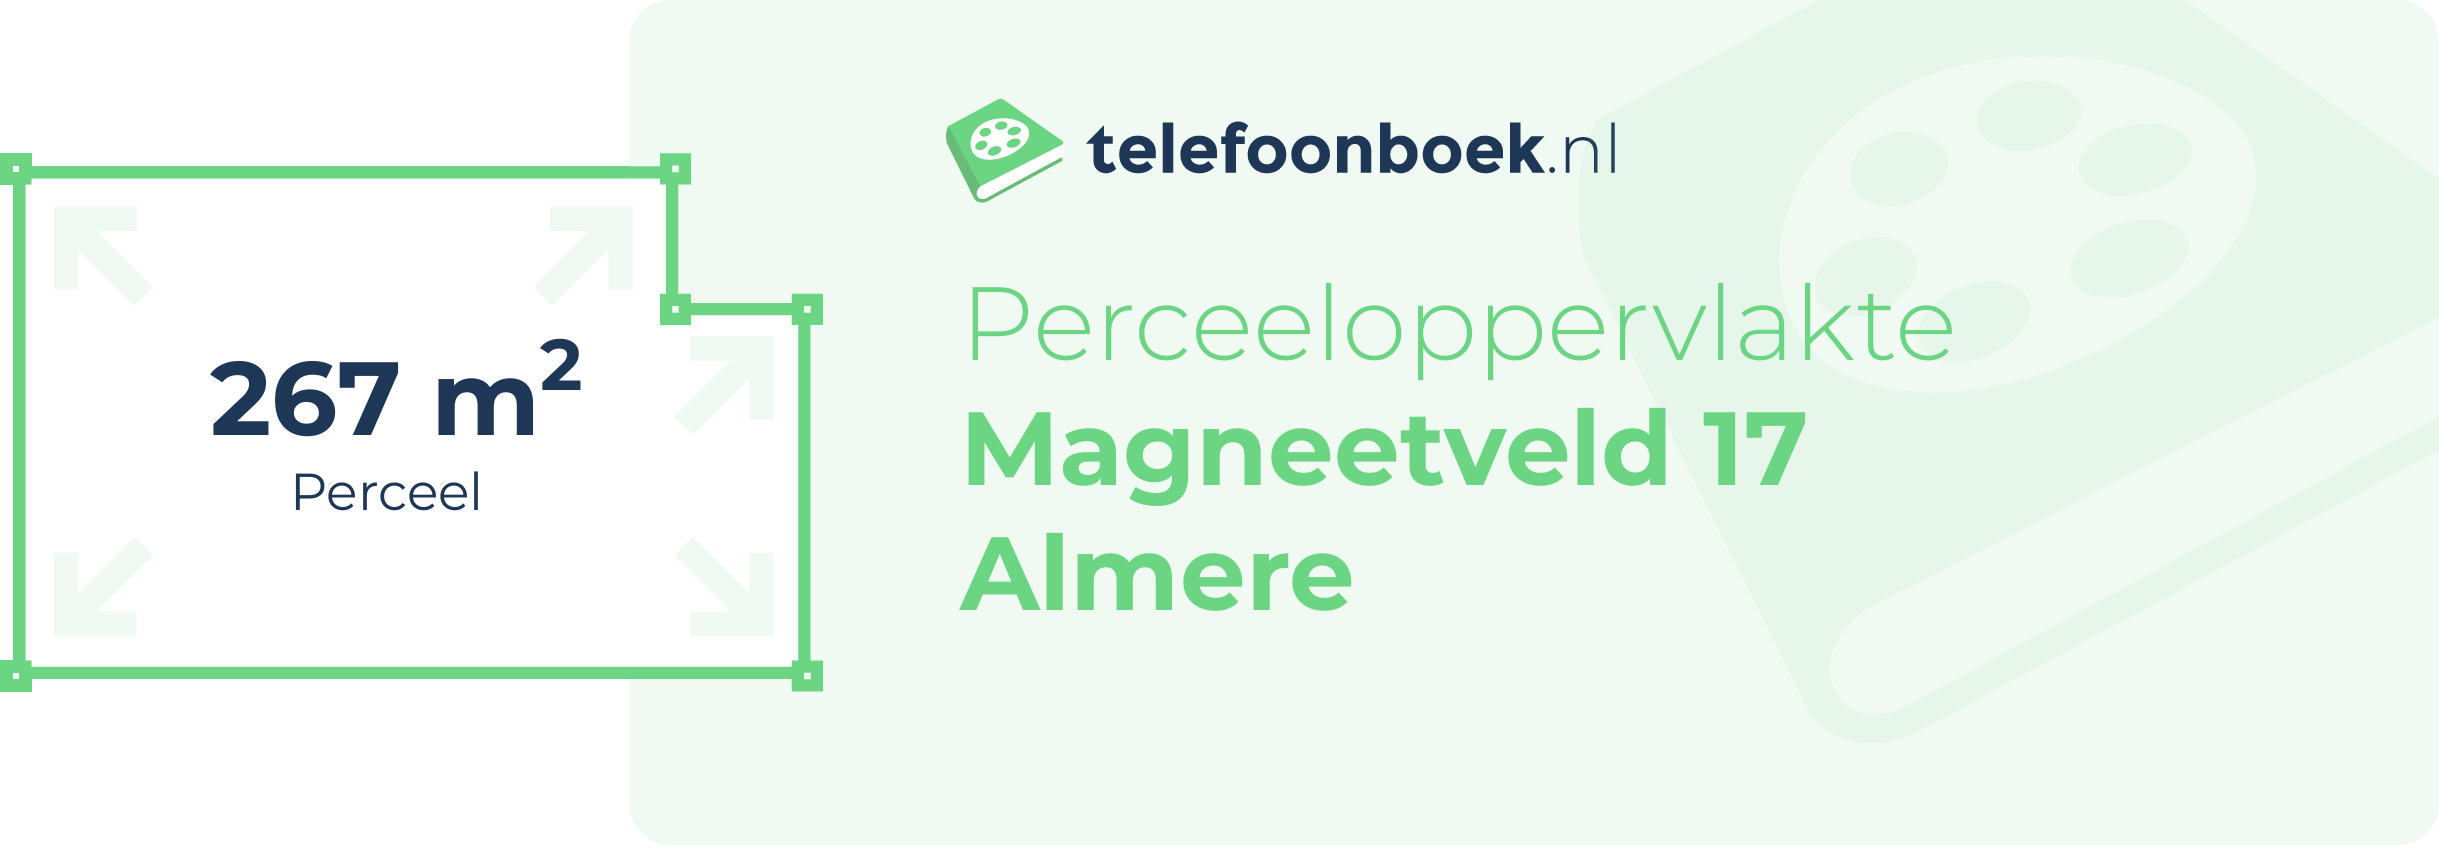 Perceeloppervlakte Magneetveld 17 Almere